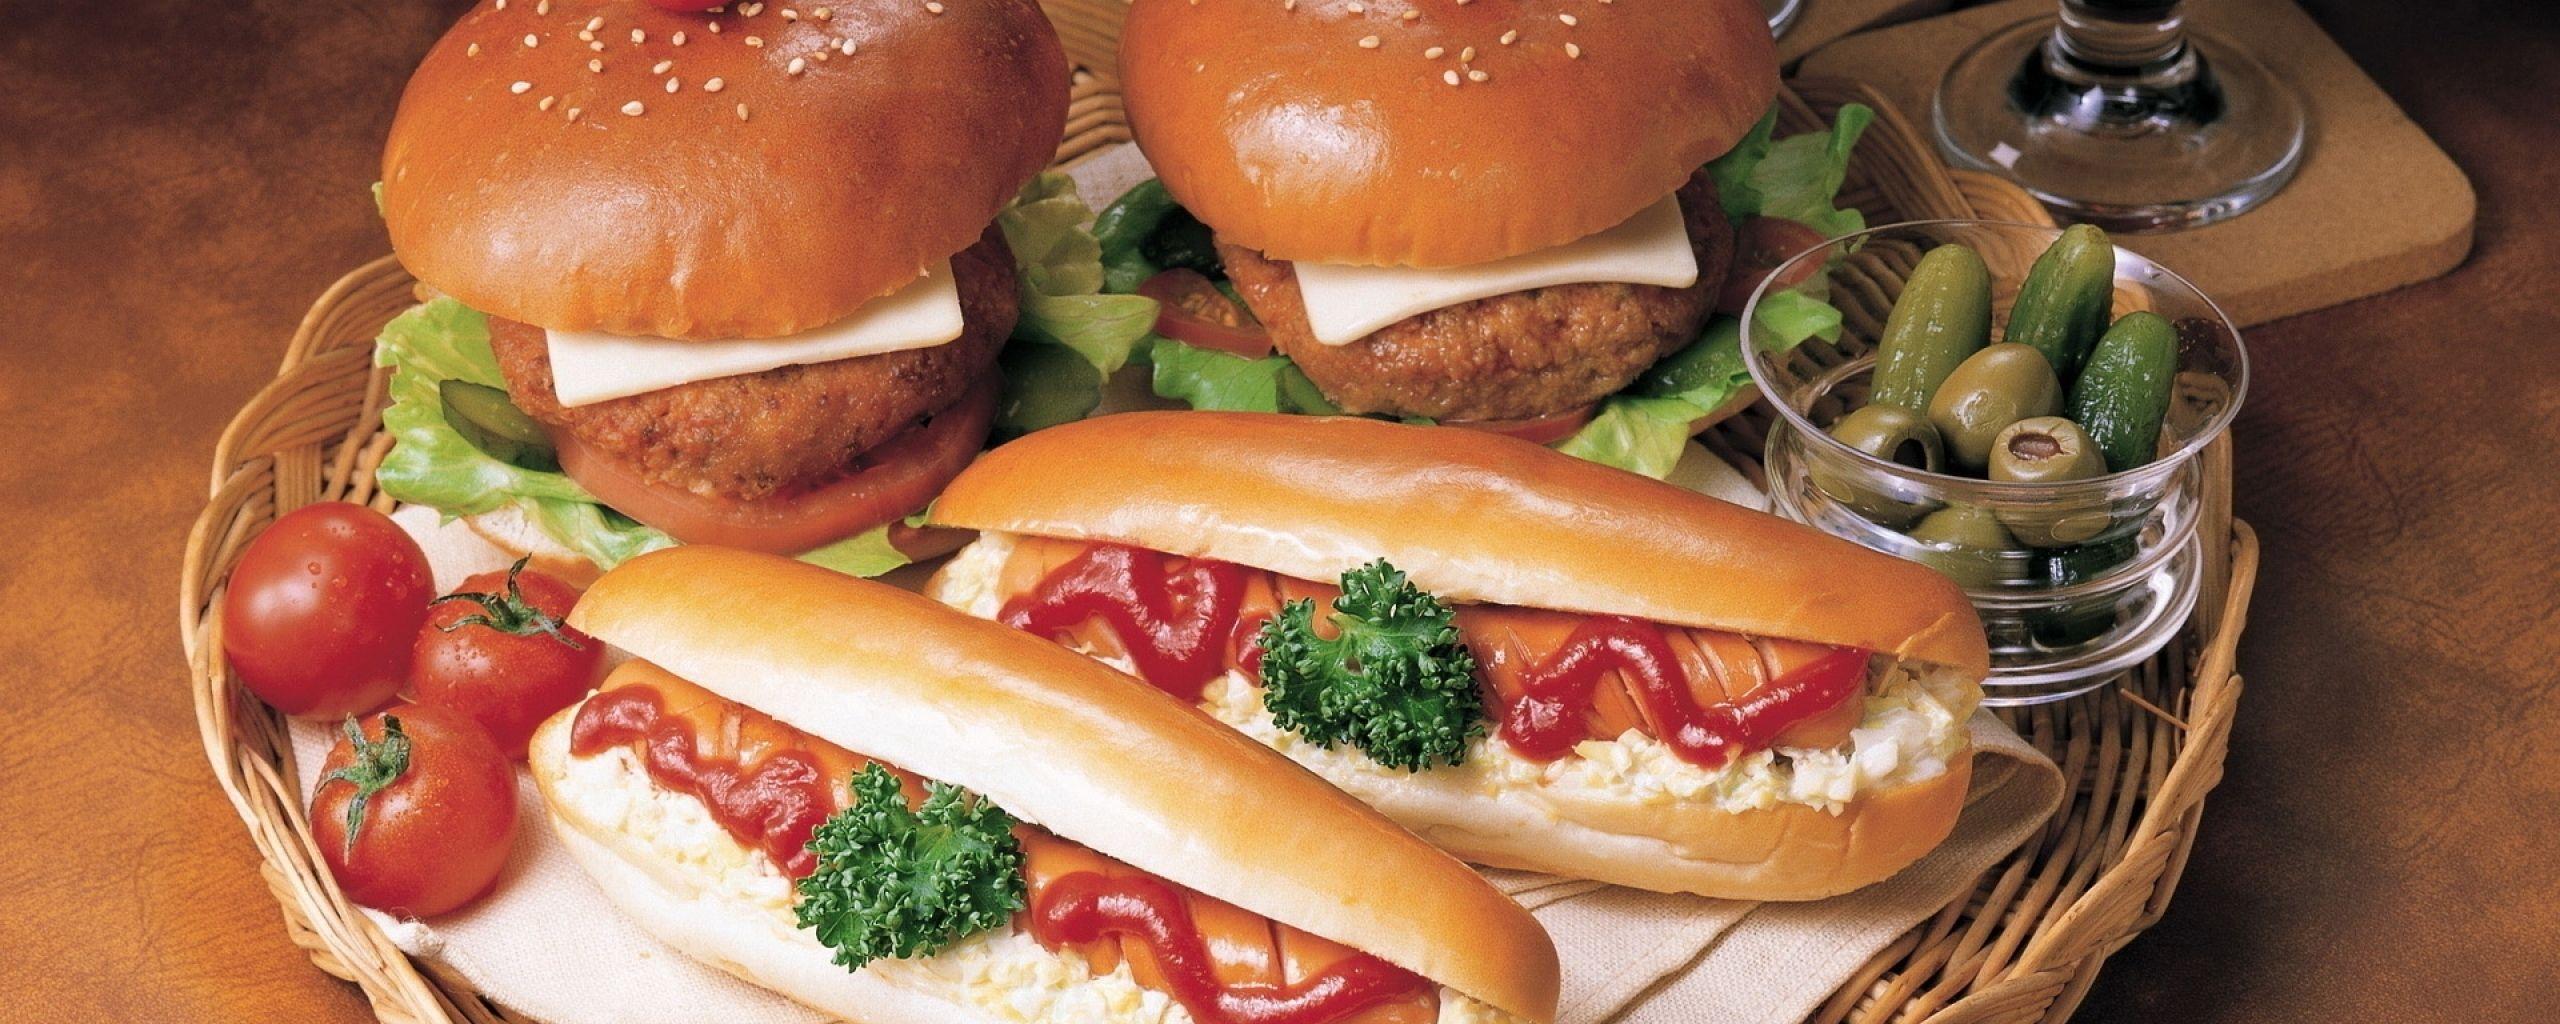 Download Wallpaper 2560x1024 Hamburger, Hot dogs in dough